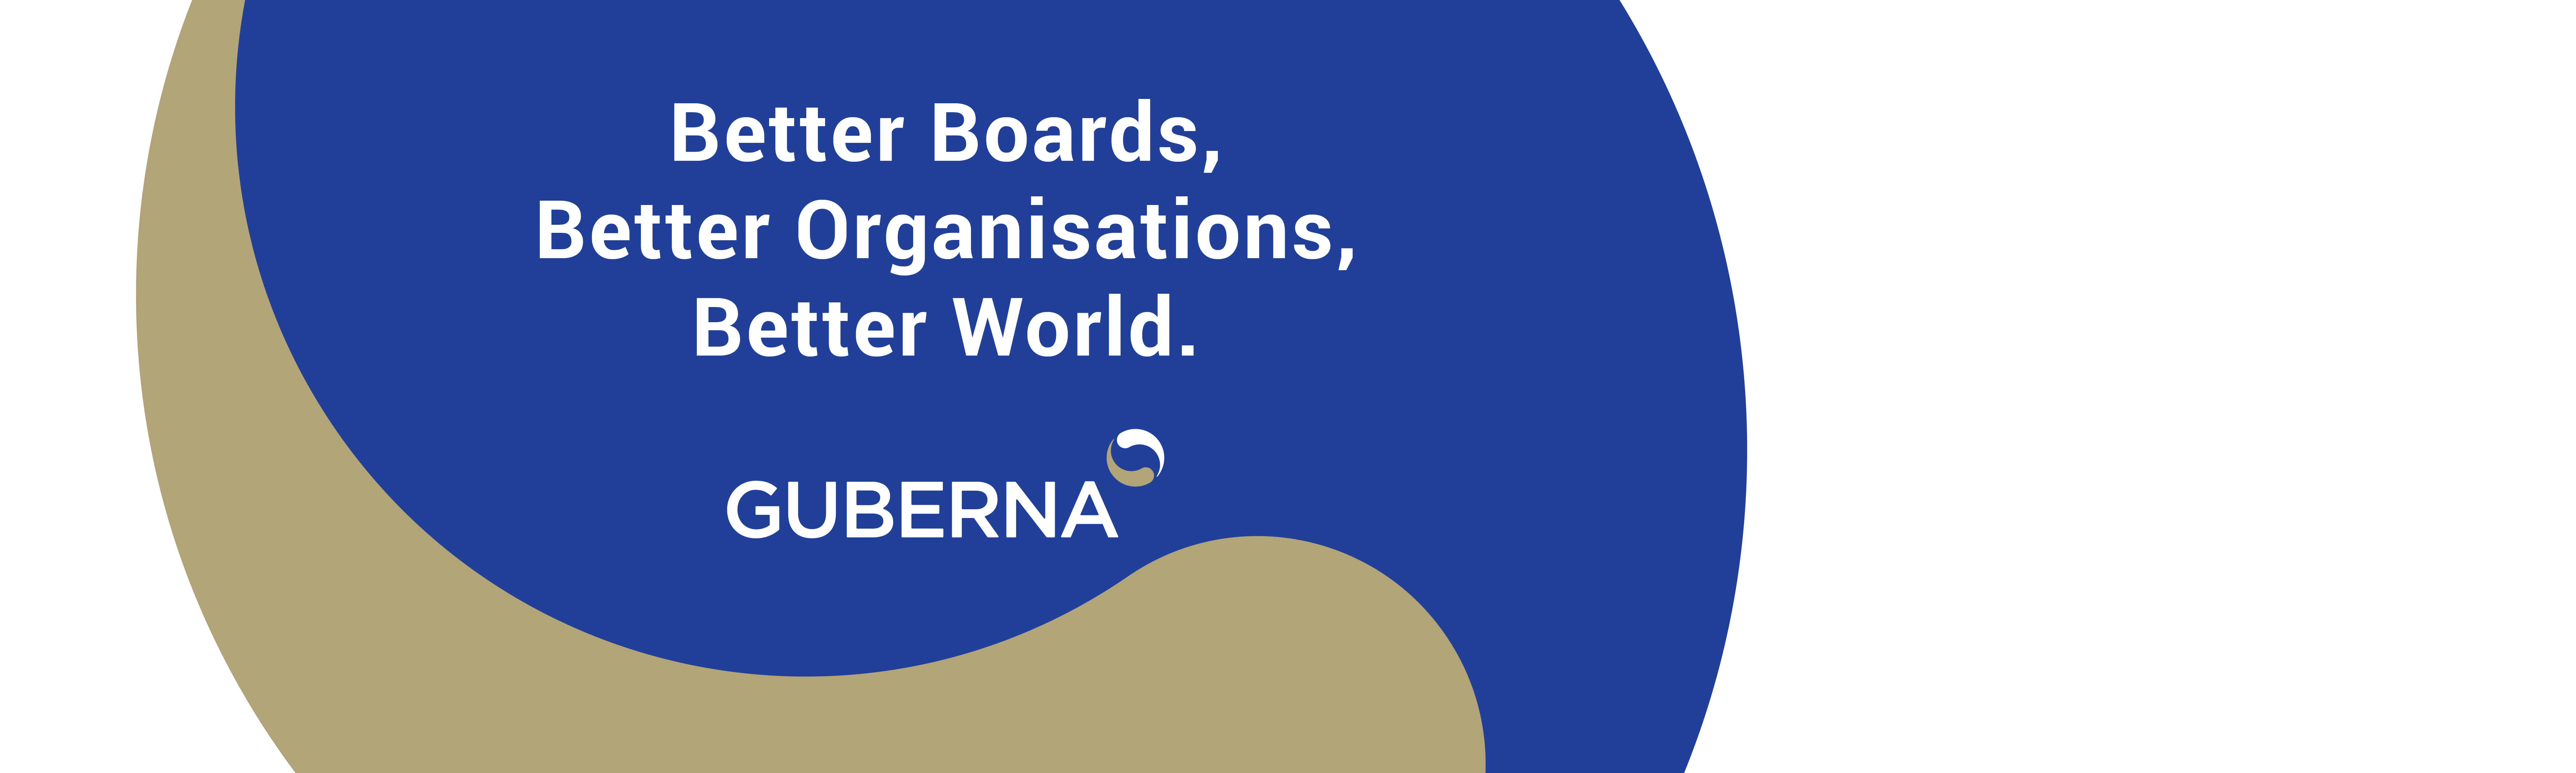 Better Boards, Better Organisations, Better World